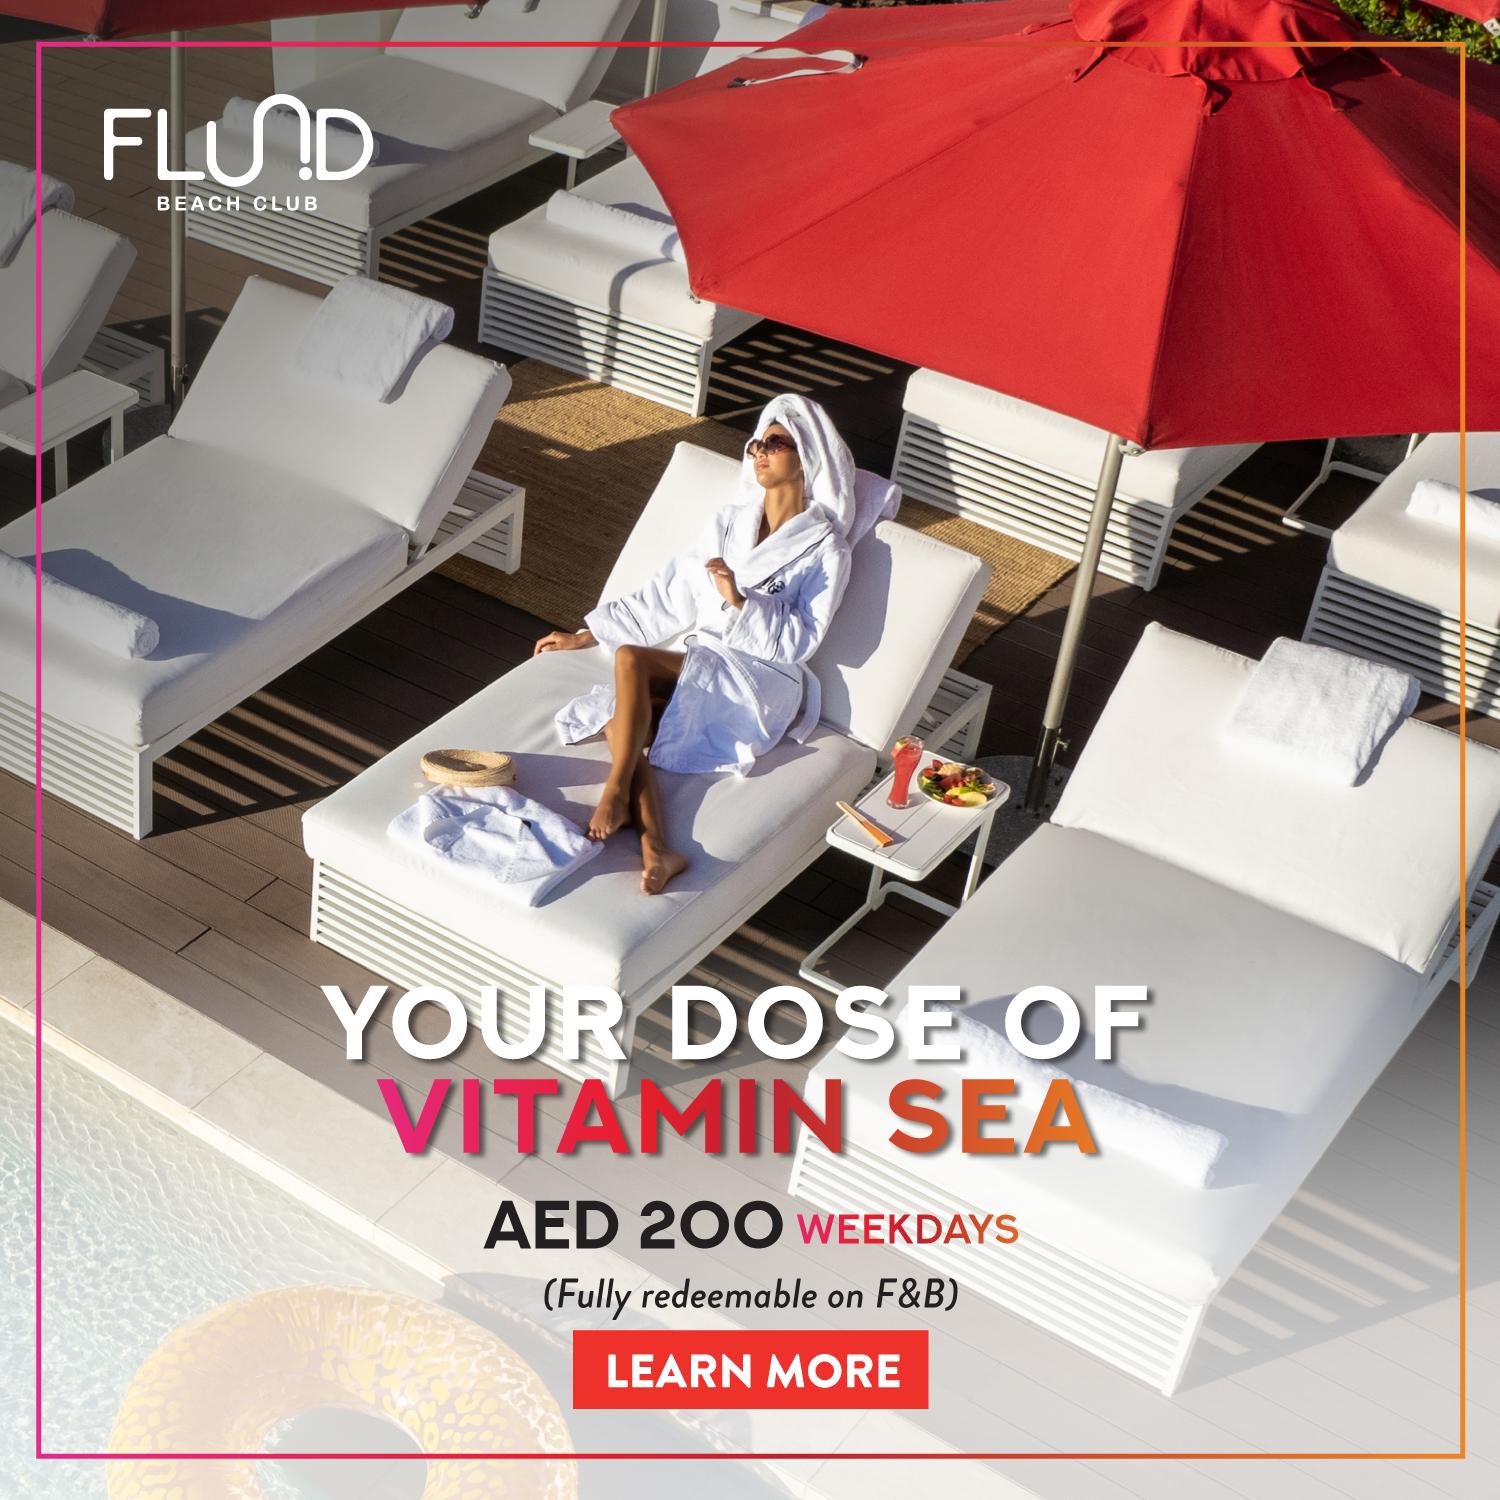 Your dose of Vitamin Sea at Fluid Beach Club